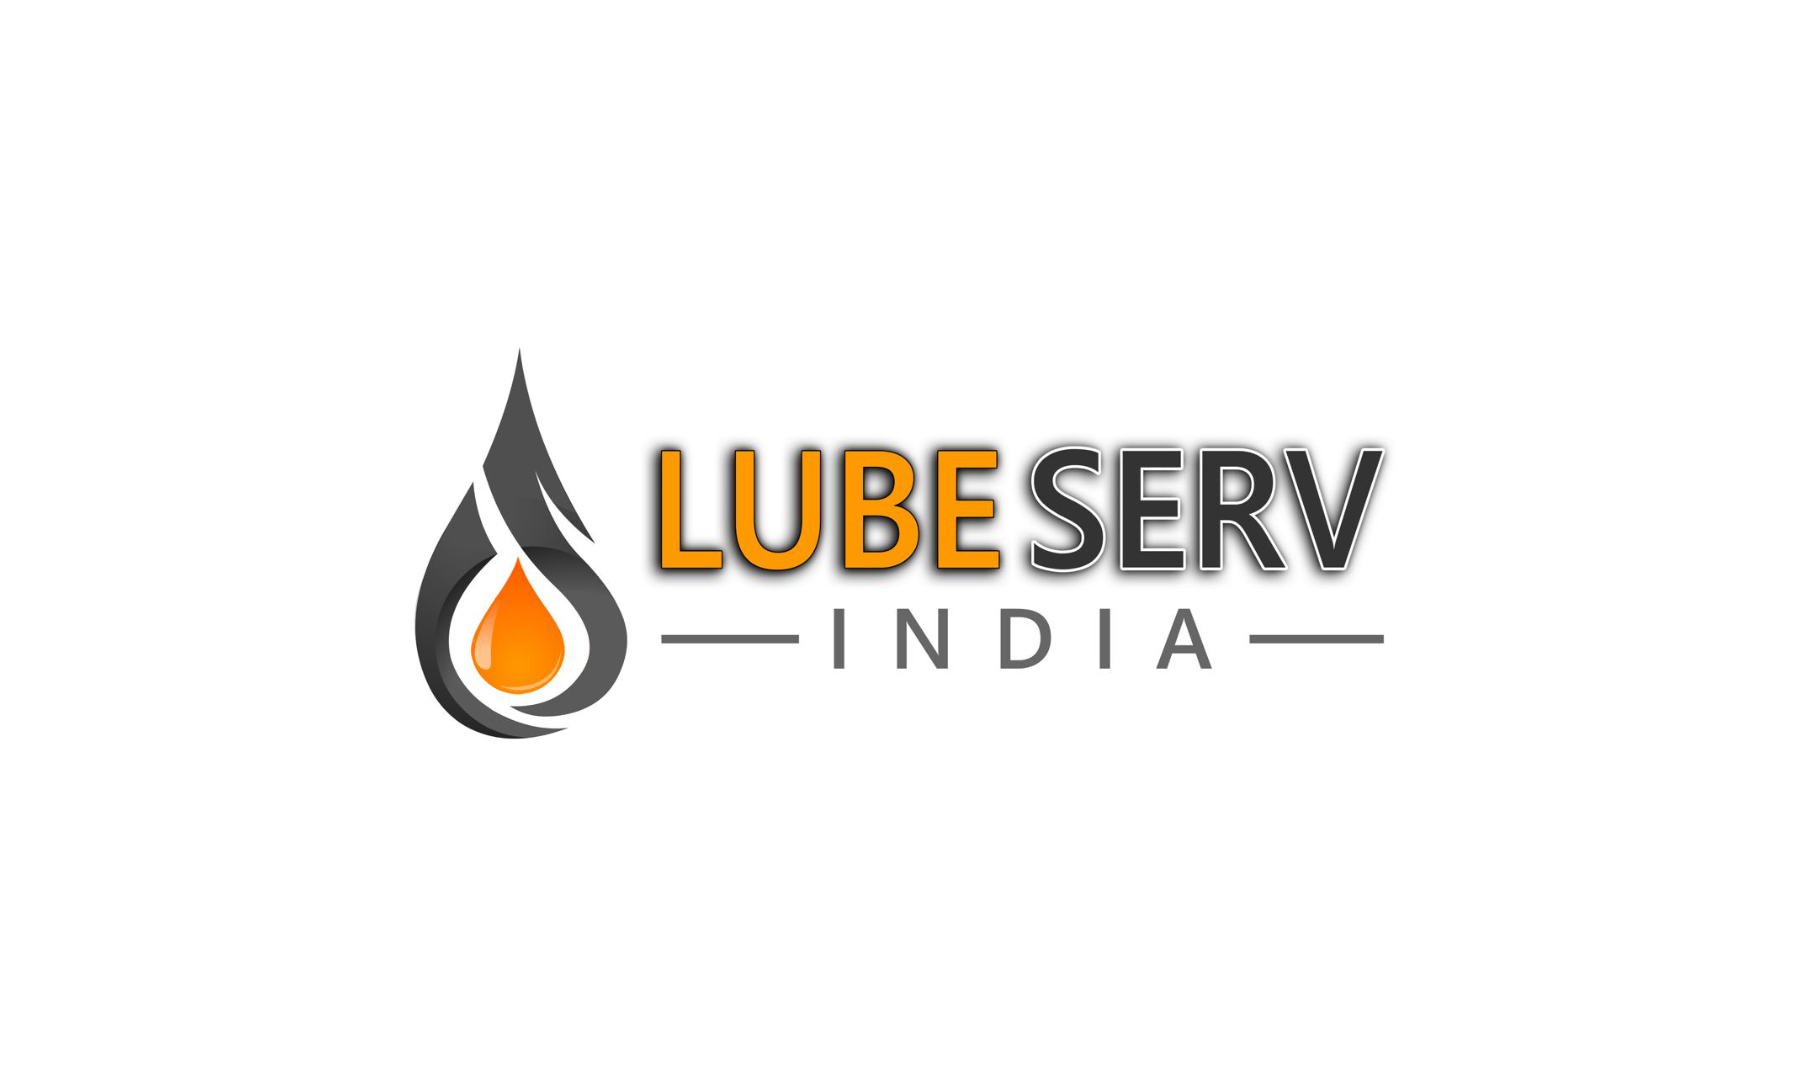 Lubserv India